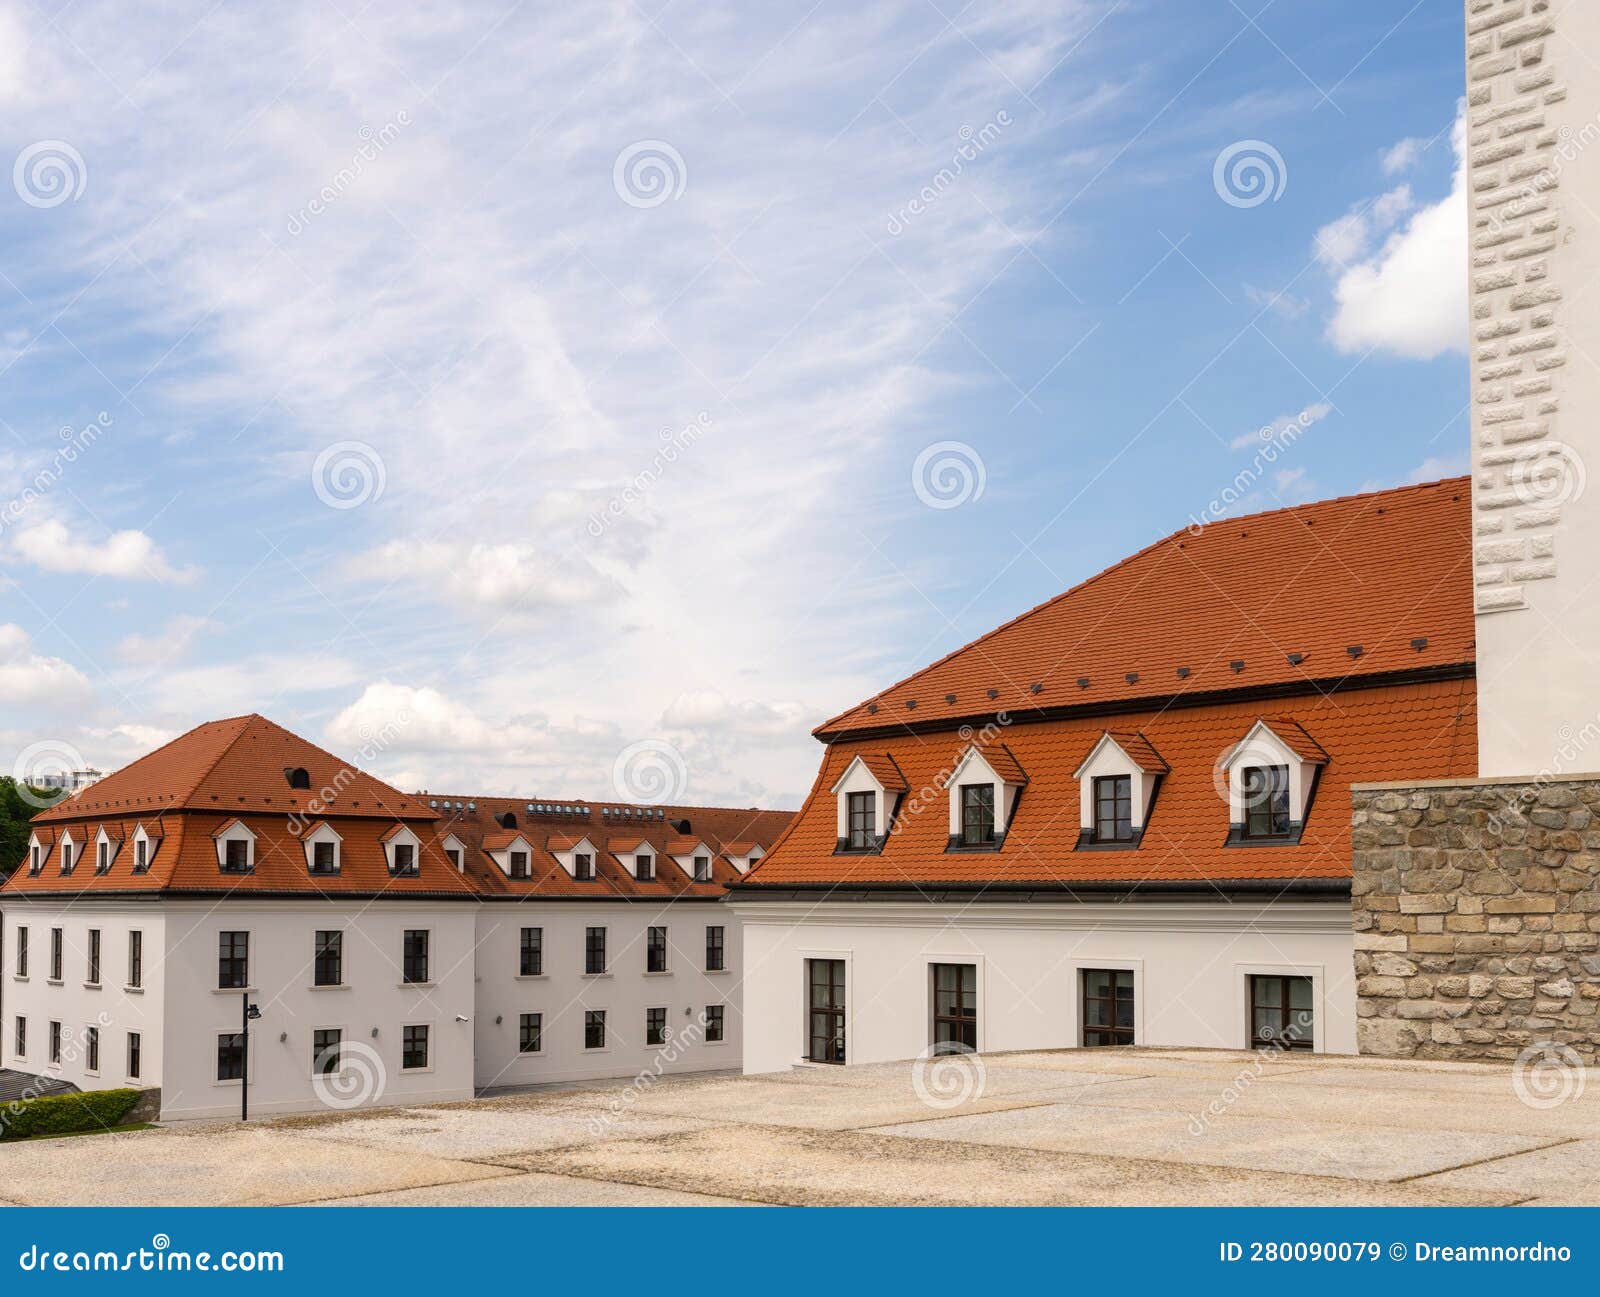 bratislava castle, the main castle of bratislava, the capital of slovakia